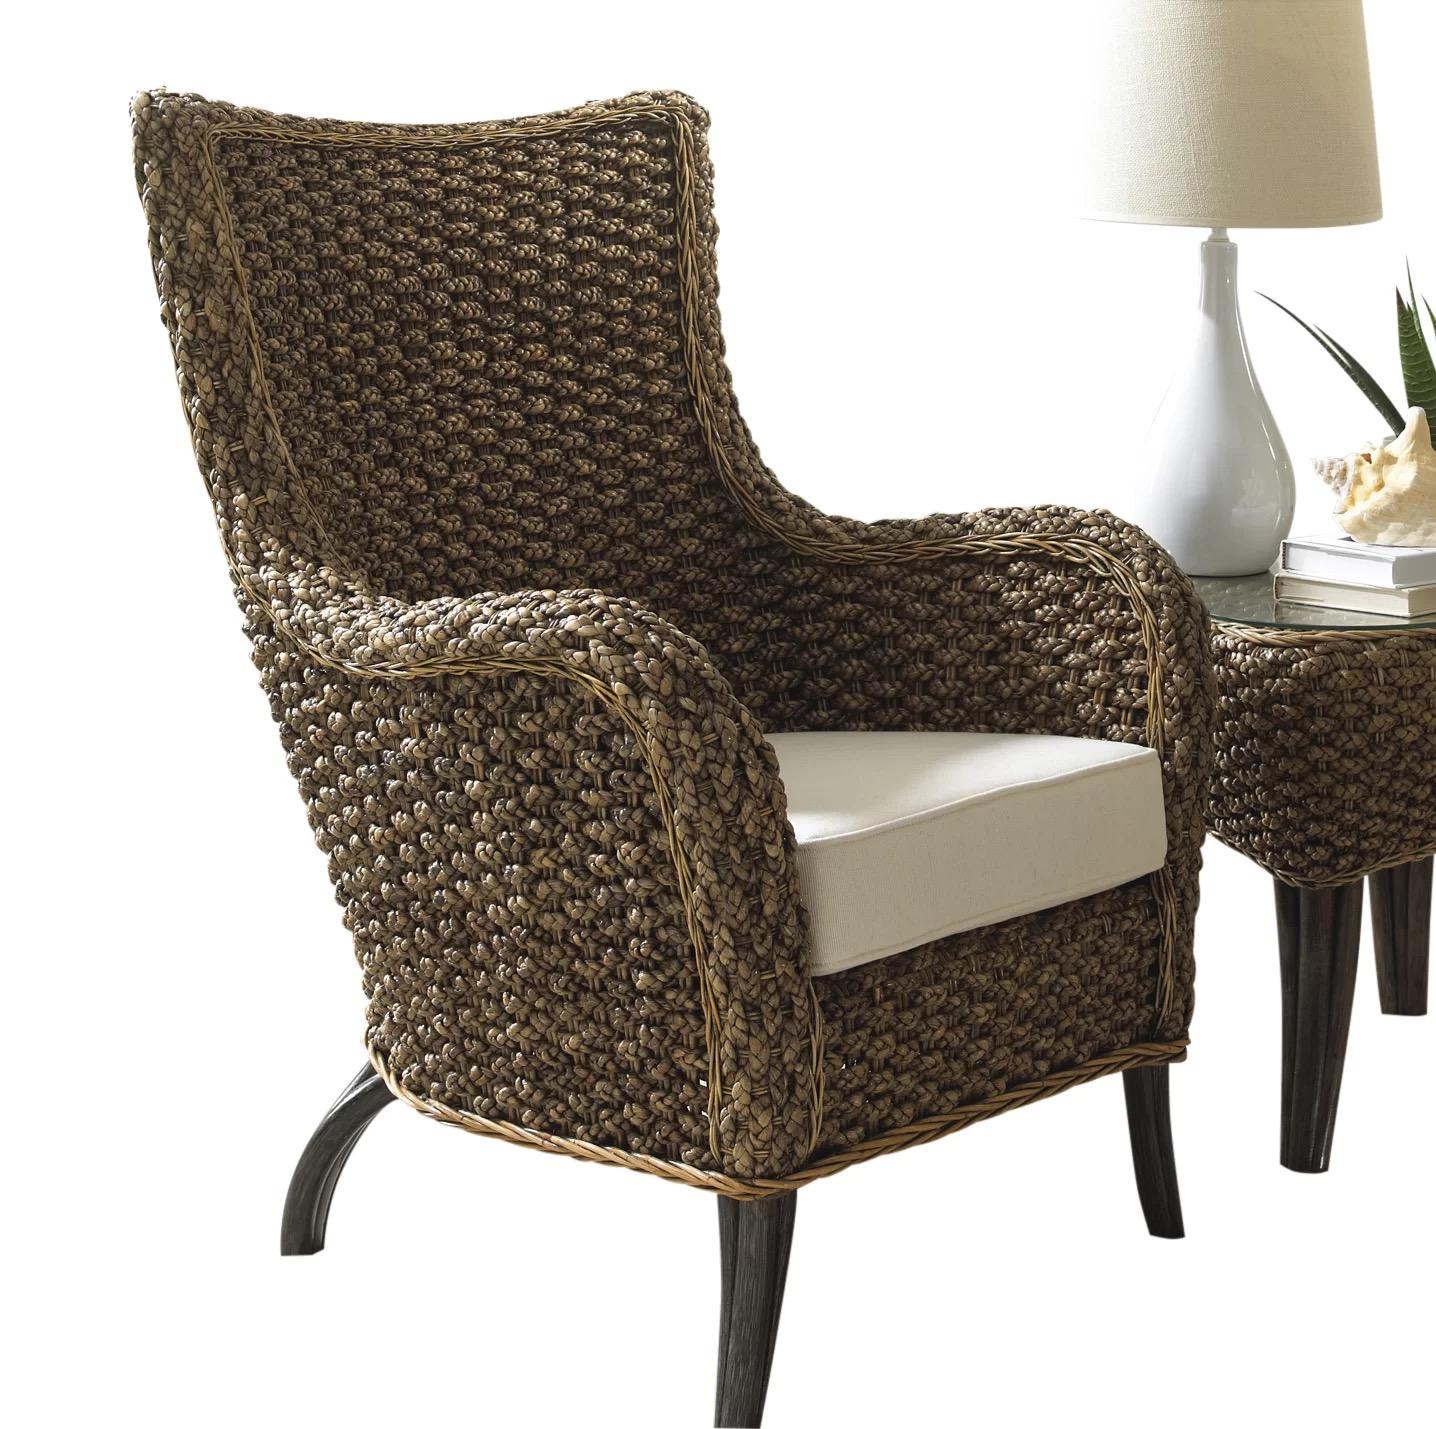 

    
Sanibel 2 PC Lounge chair Set with cushions PJS-1001-ATQ-2CE Panama Jack
